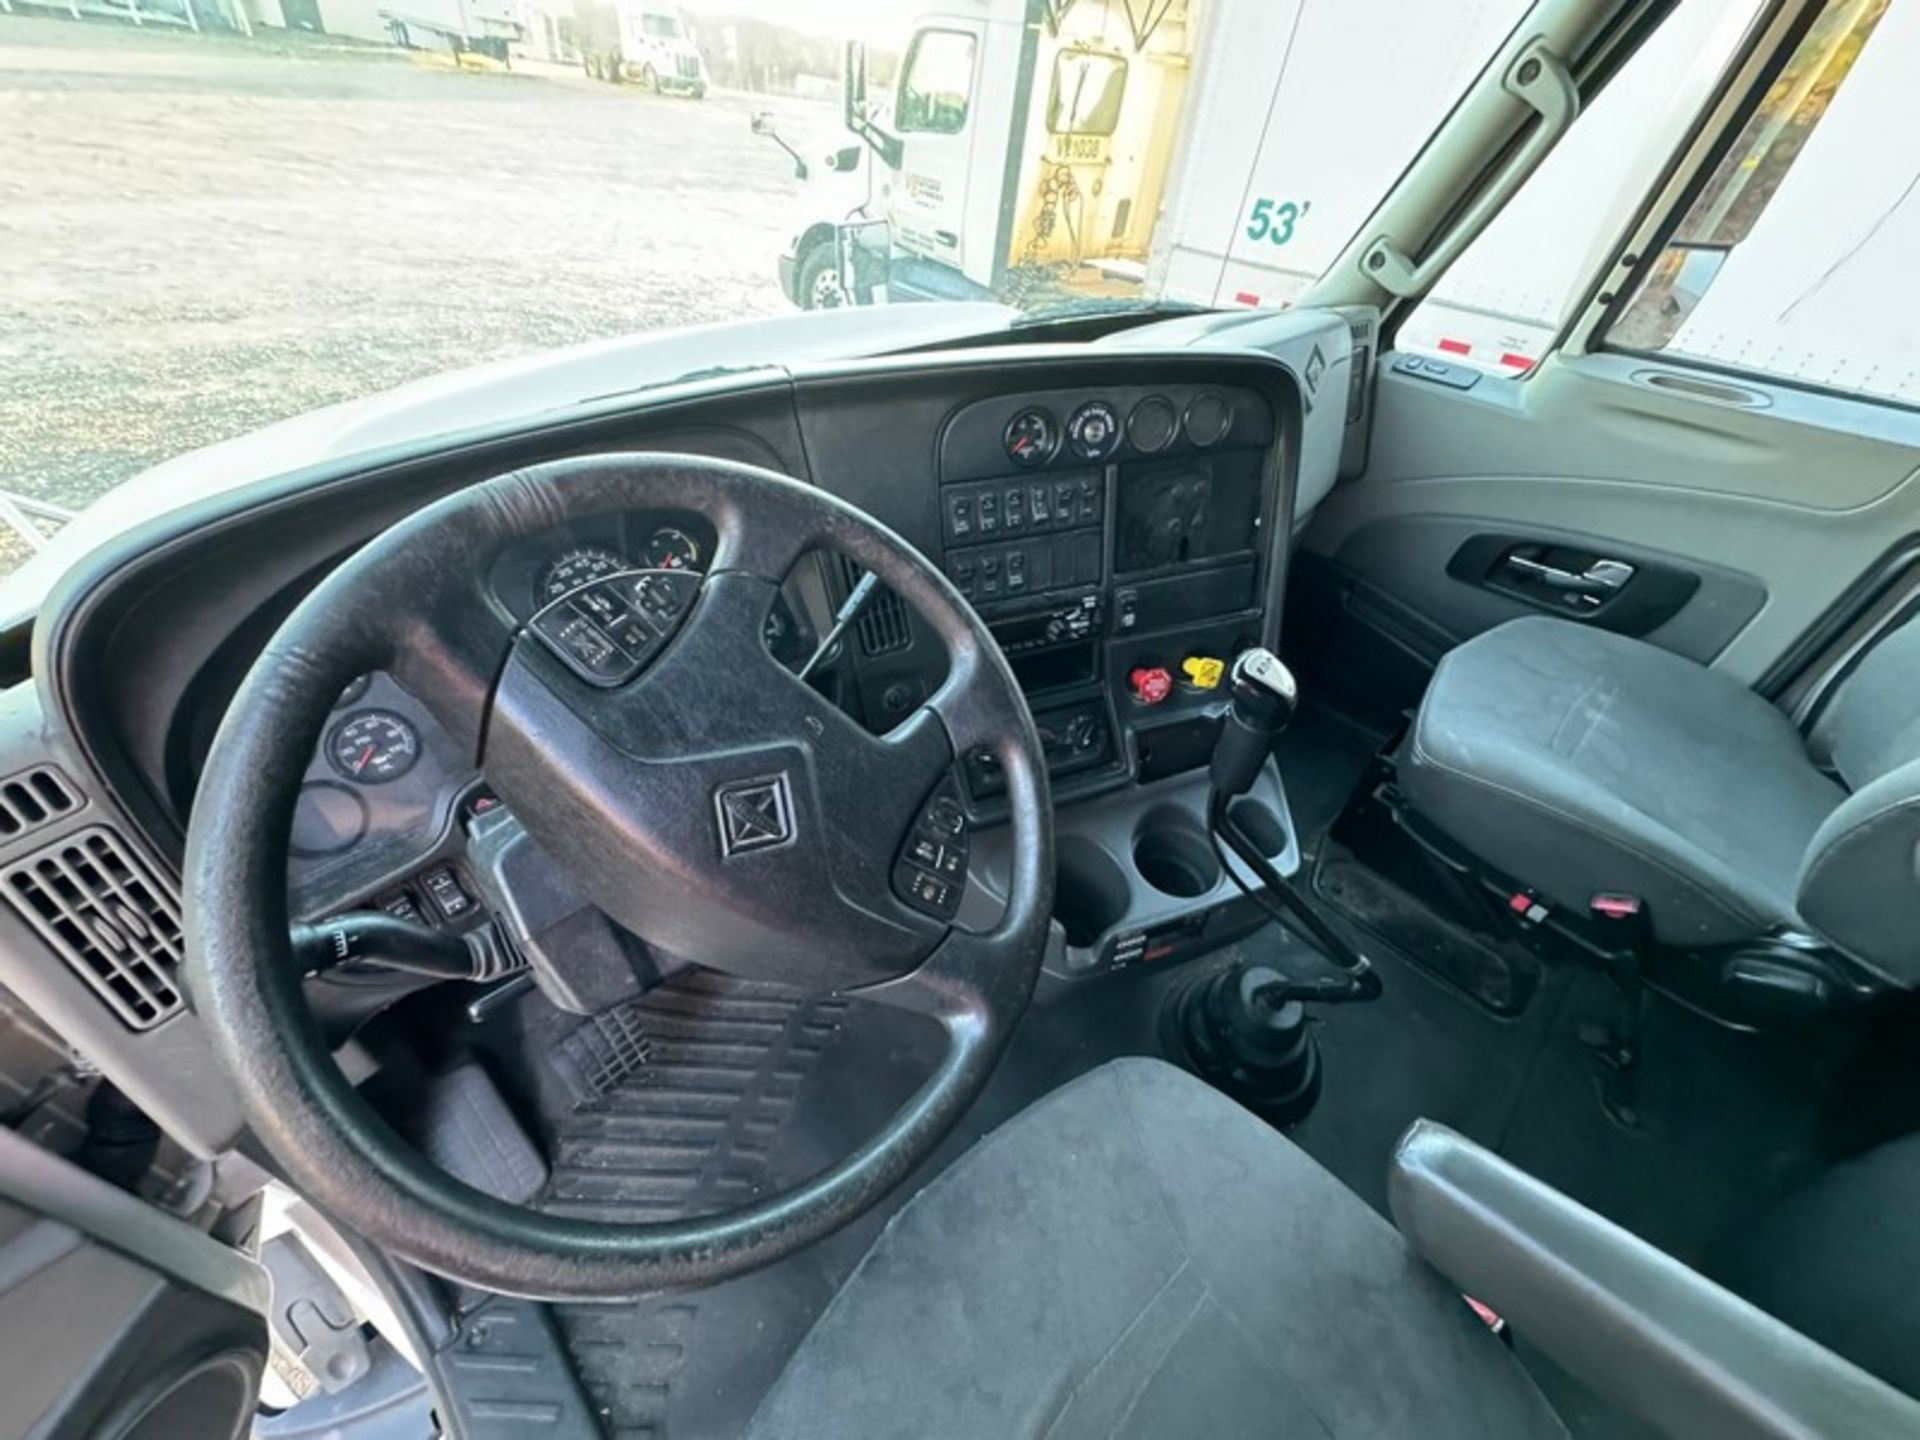 2012 International Truck Tractor, VIN #: 3HSDJAPPR0GN002705, with Sleep Cab, Miles: 684, 121(Service - Bild 15 aus 29